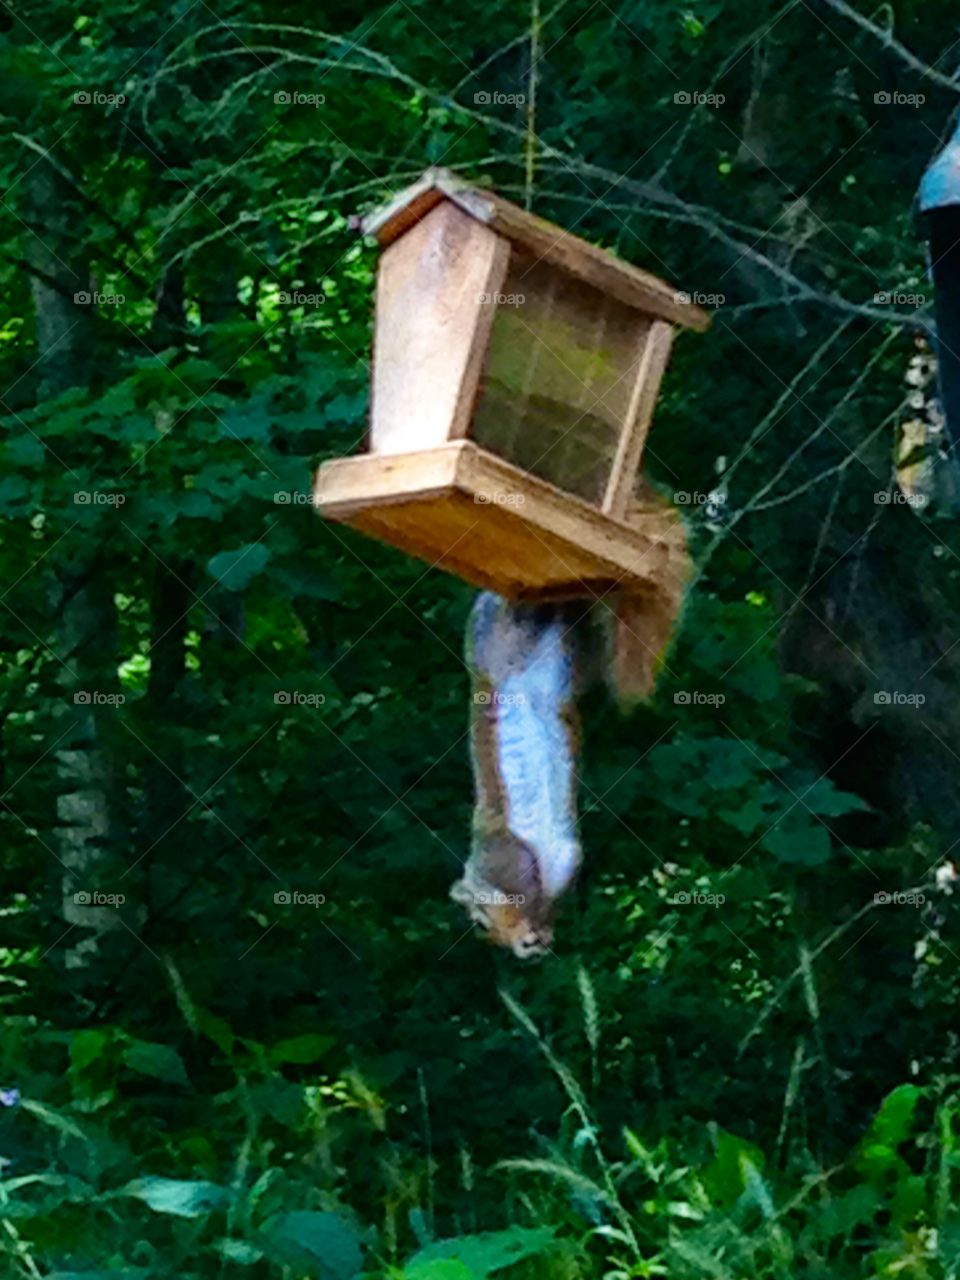 squirrel hanging upside down getting bird food